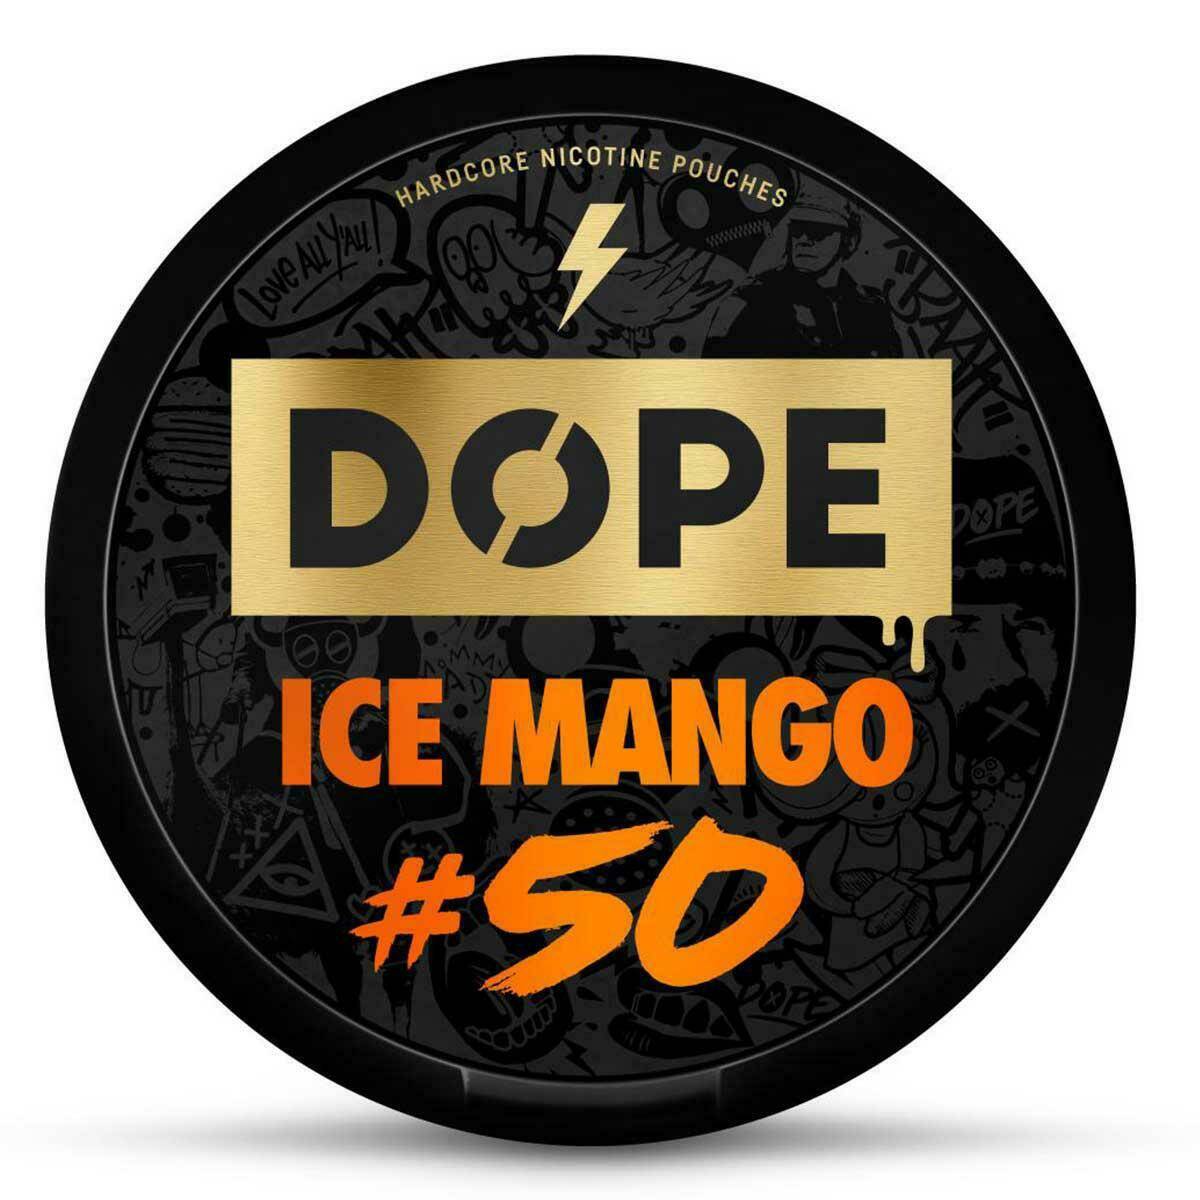 SEL - Nicotine pouches DOPE - Ice Mango 50mg/g